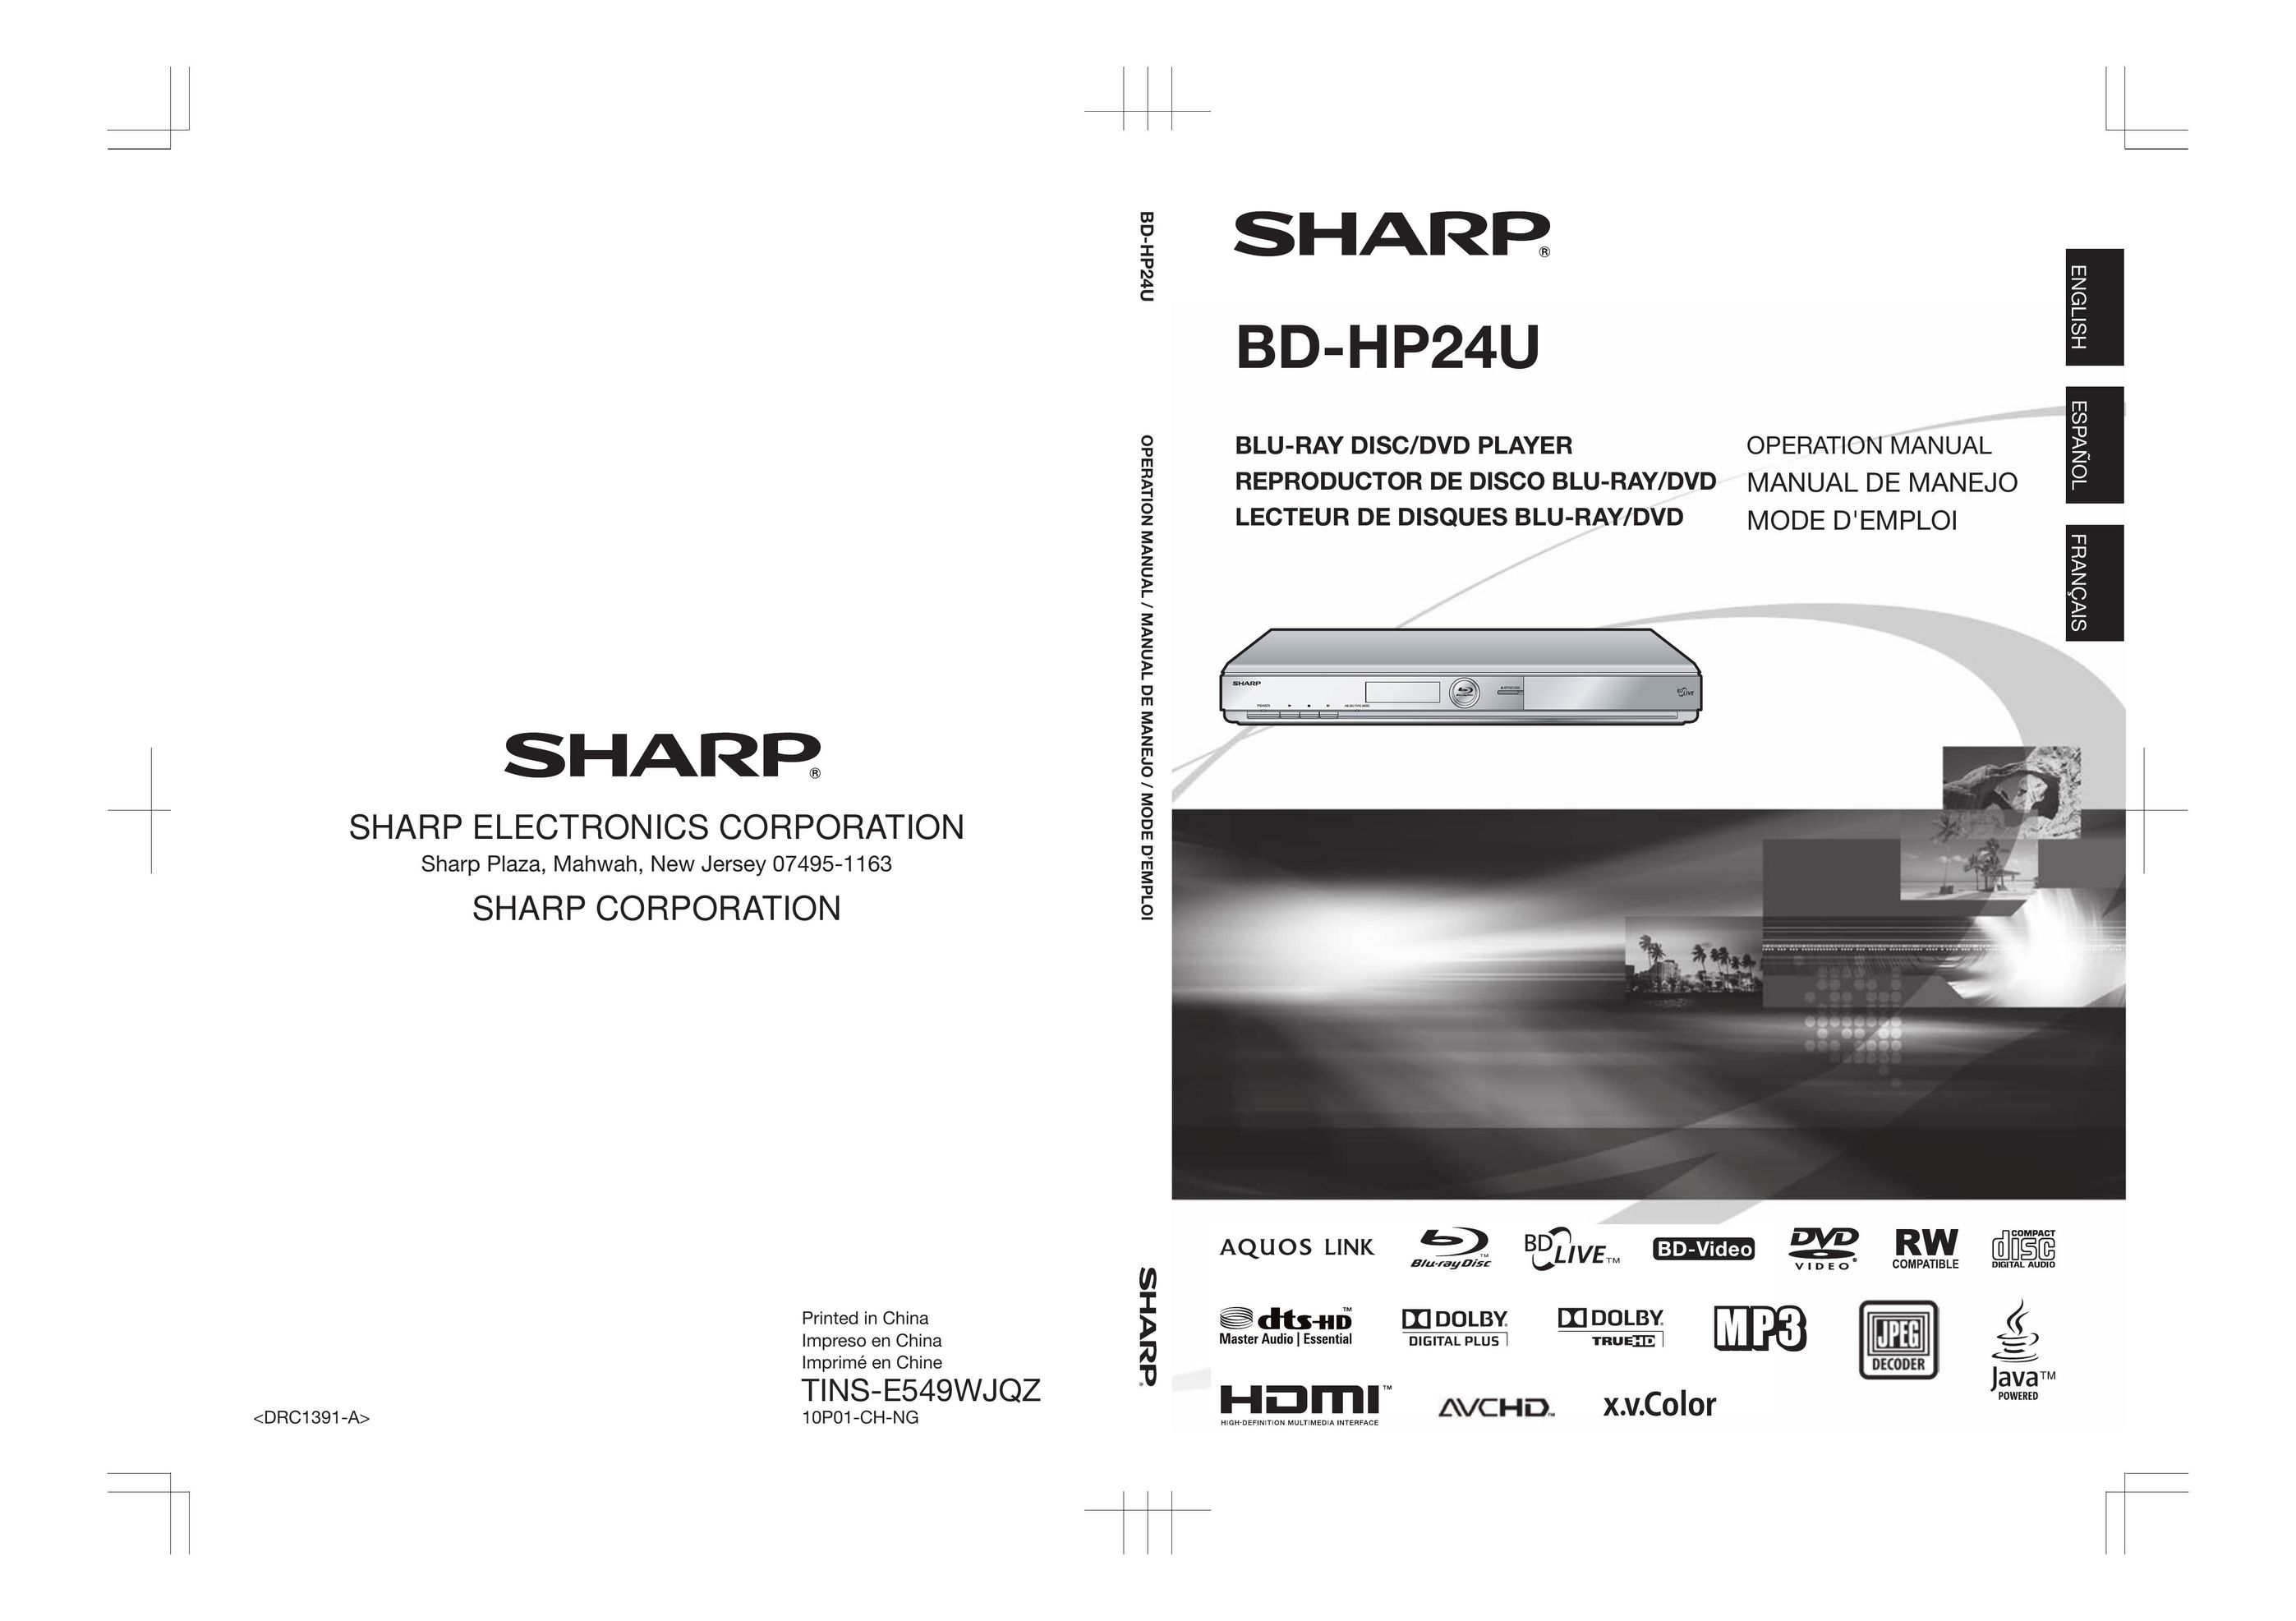 Sharp TINS-E549WJQZ Blu-ray Player User Manual